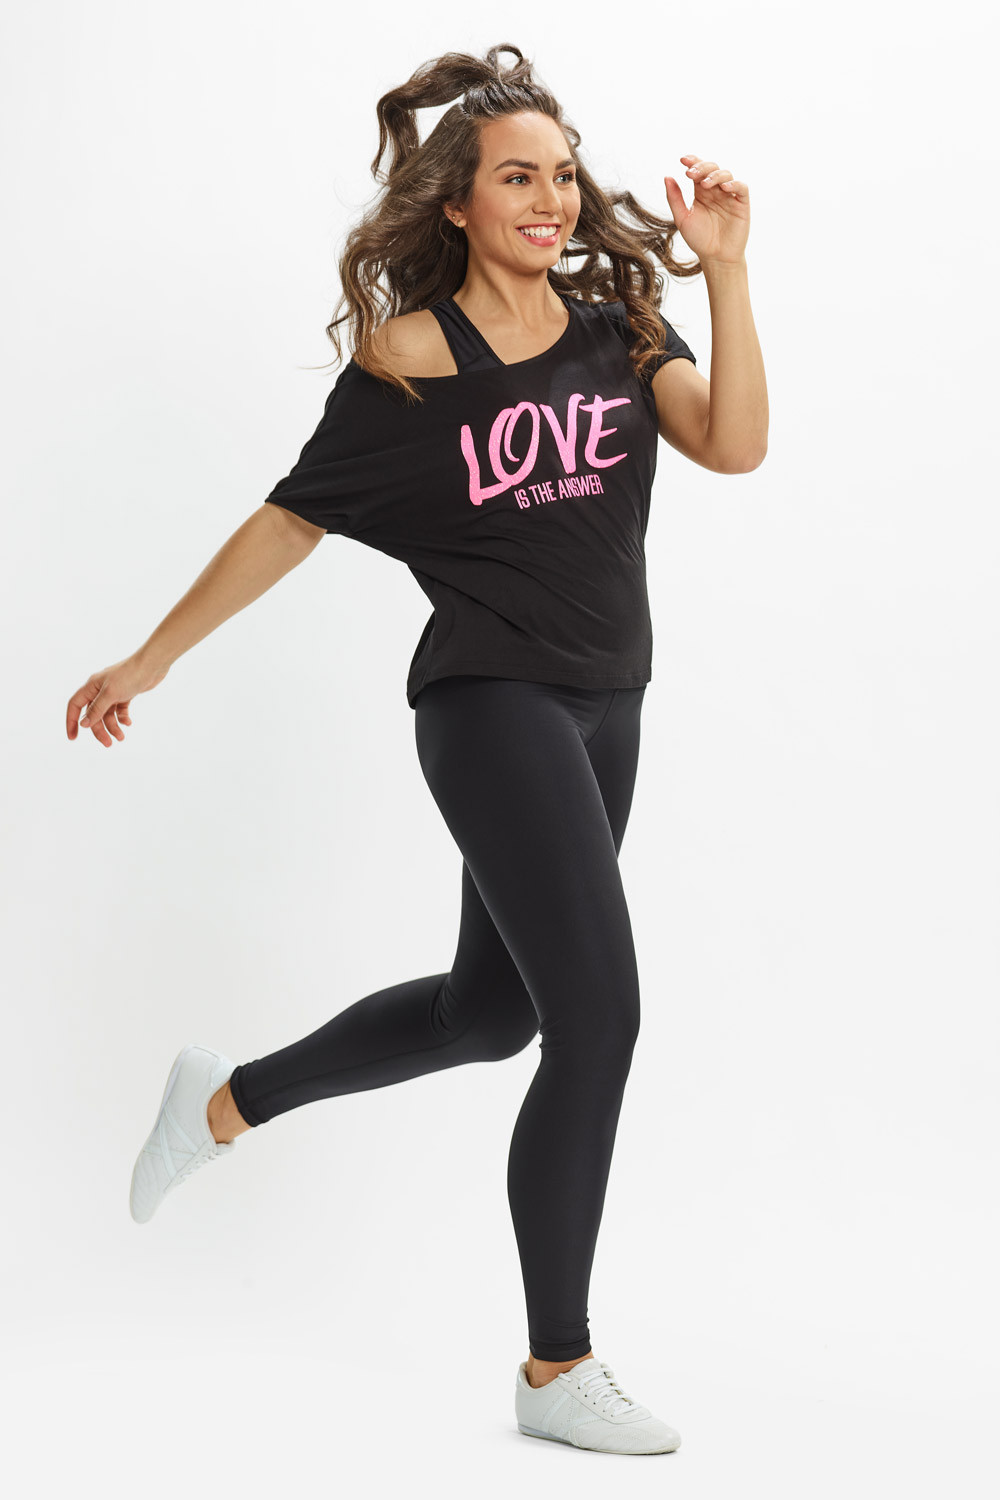 Ultra leichtes Modal-Kurzarmshirt MCT002 mit neon pinkem Glitzer-Aufdruck  „Love is the answer”, Winshape Dance Style